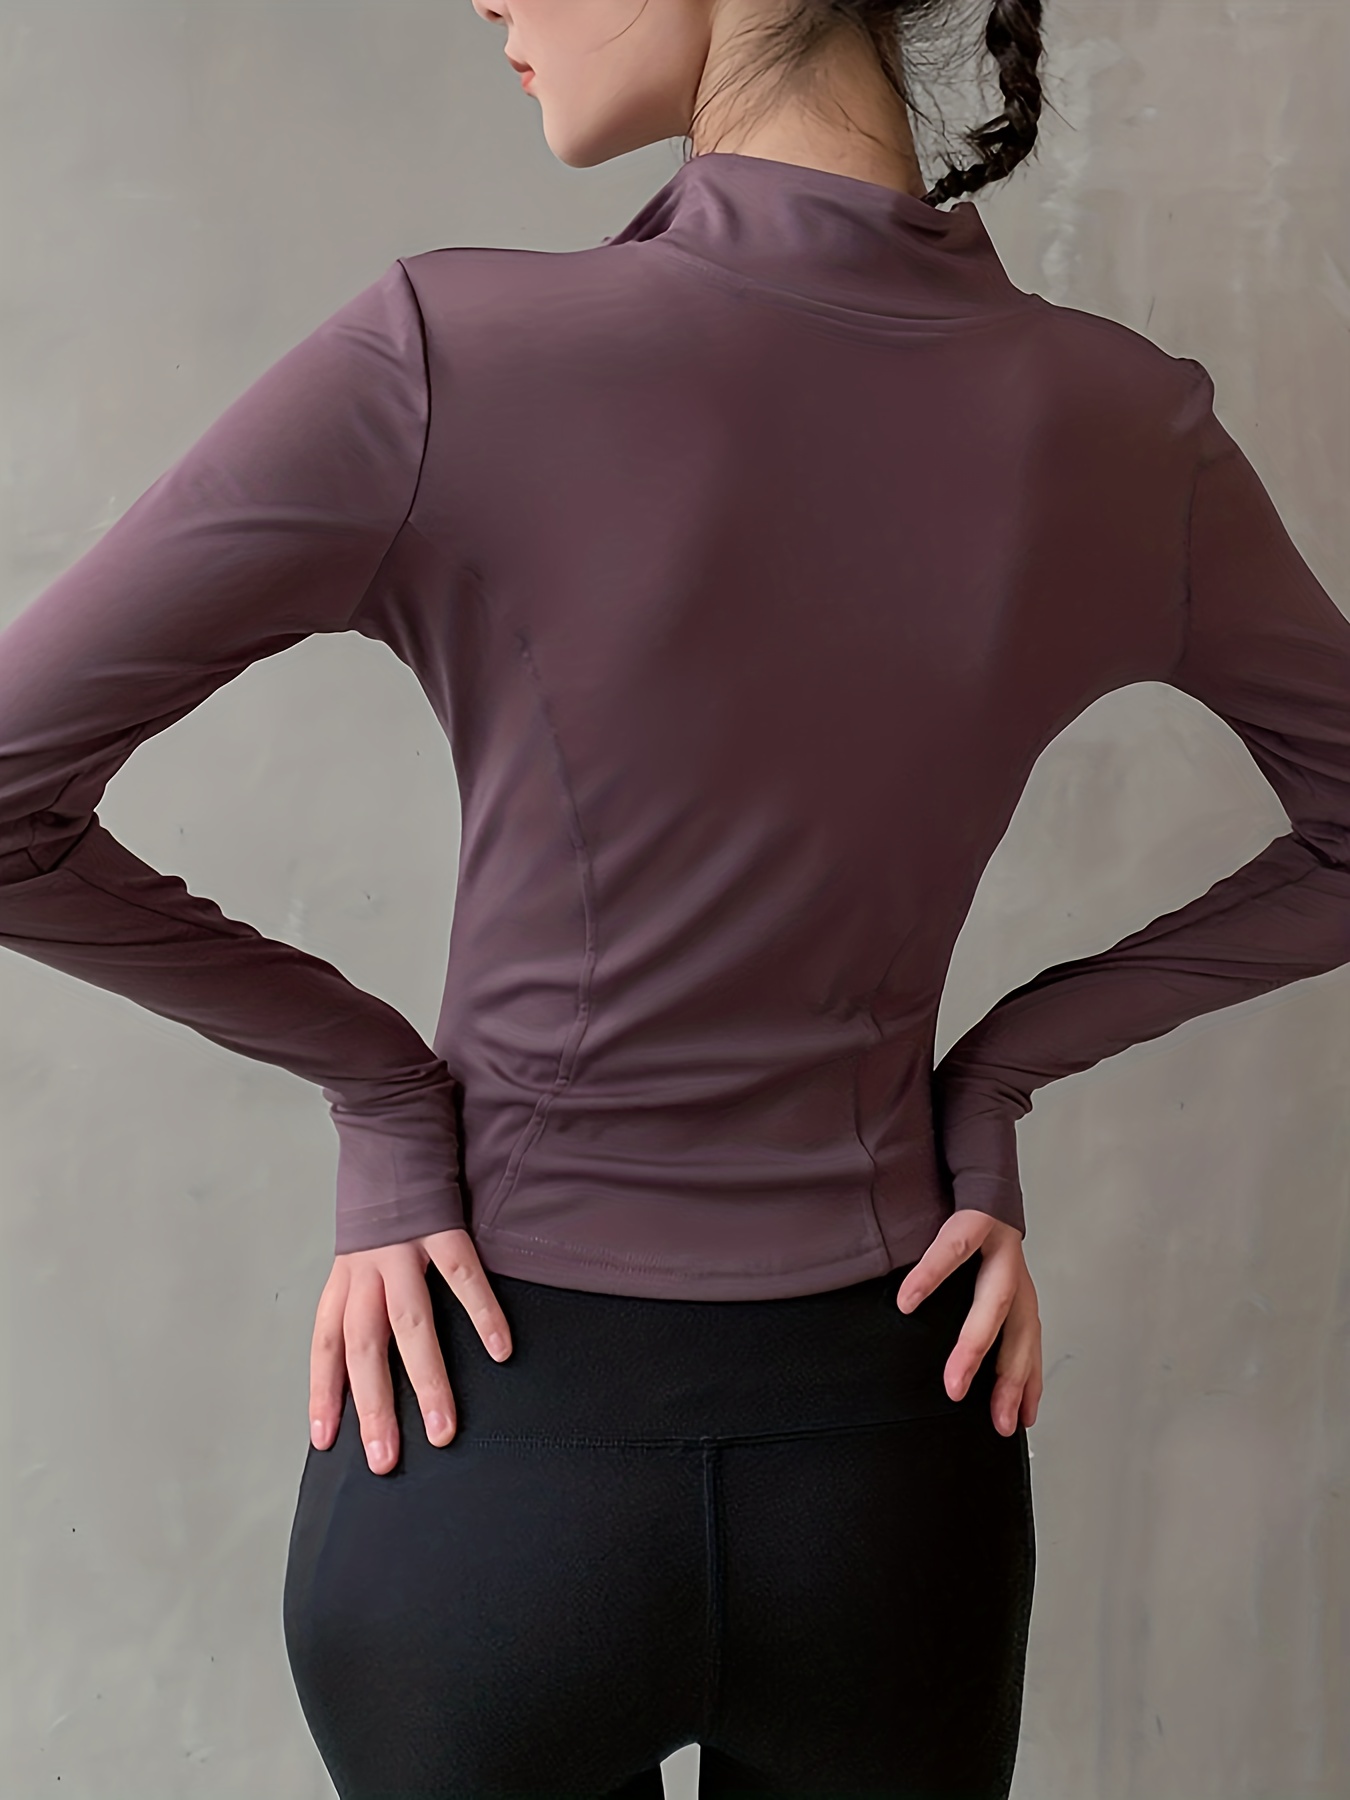 Women's Lightweight Workout Jacket Full-zip Long Sleeve Yoga Sportswear  Quick Dry Running Fitness Tops Outwear 